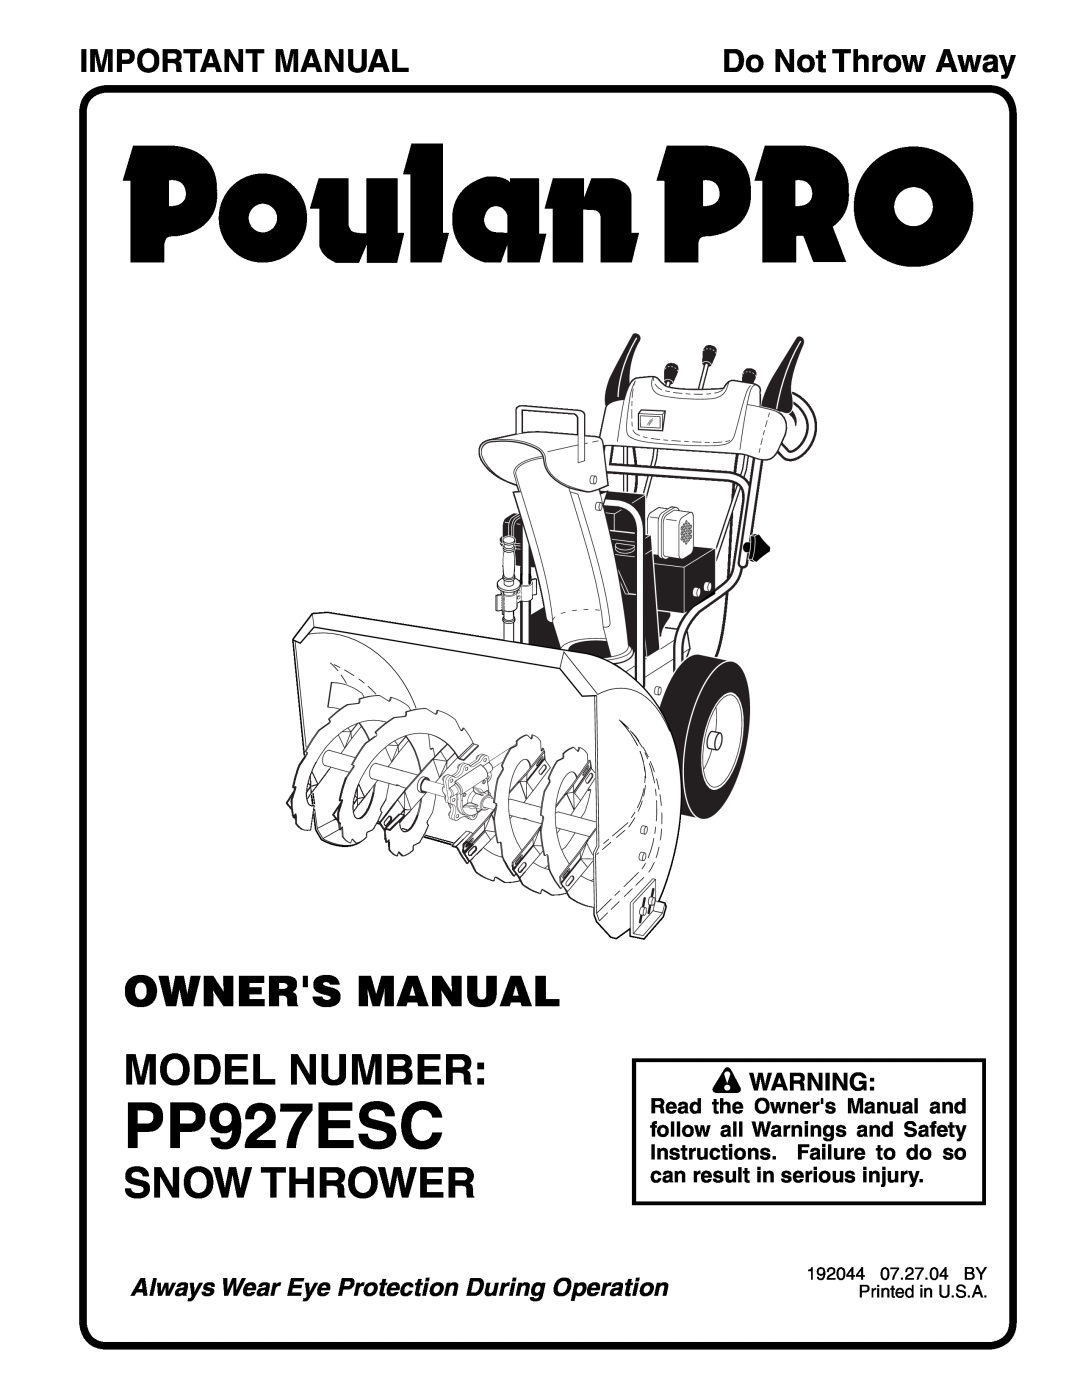 Poulan 192044 owner manual Snow Thrower, Important Manual, PP927ESC, Do Not Throw Away 